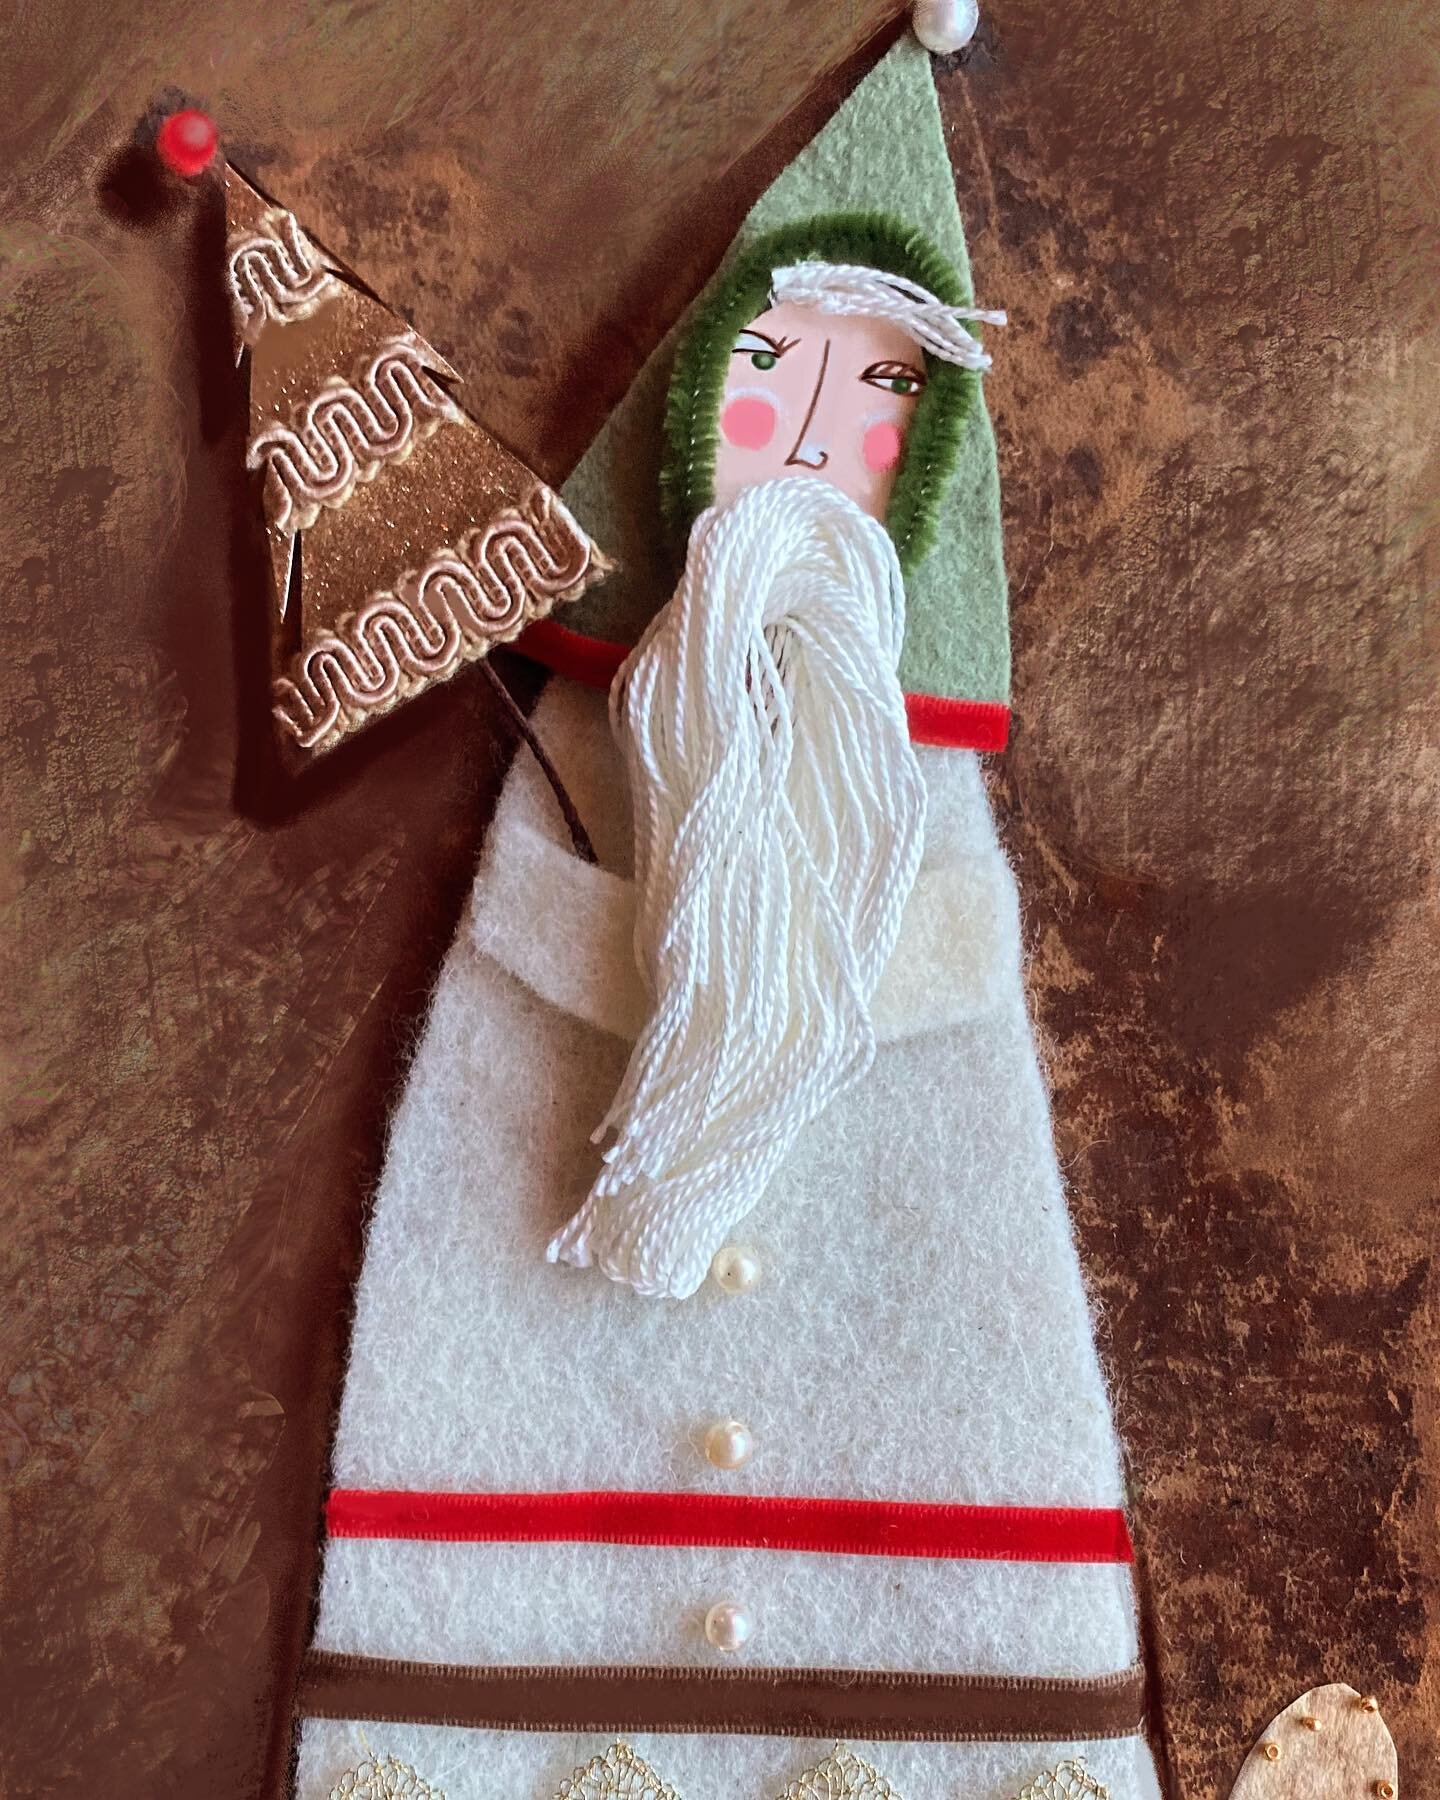 How I imagine a German Santa looks :) #christmascollage #christmascard #oldfashionedsanta #artistsoninstagram